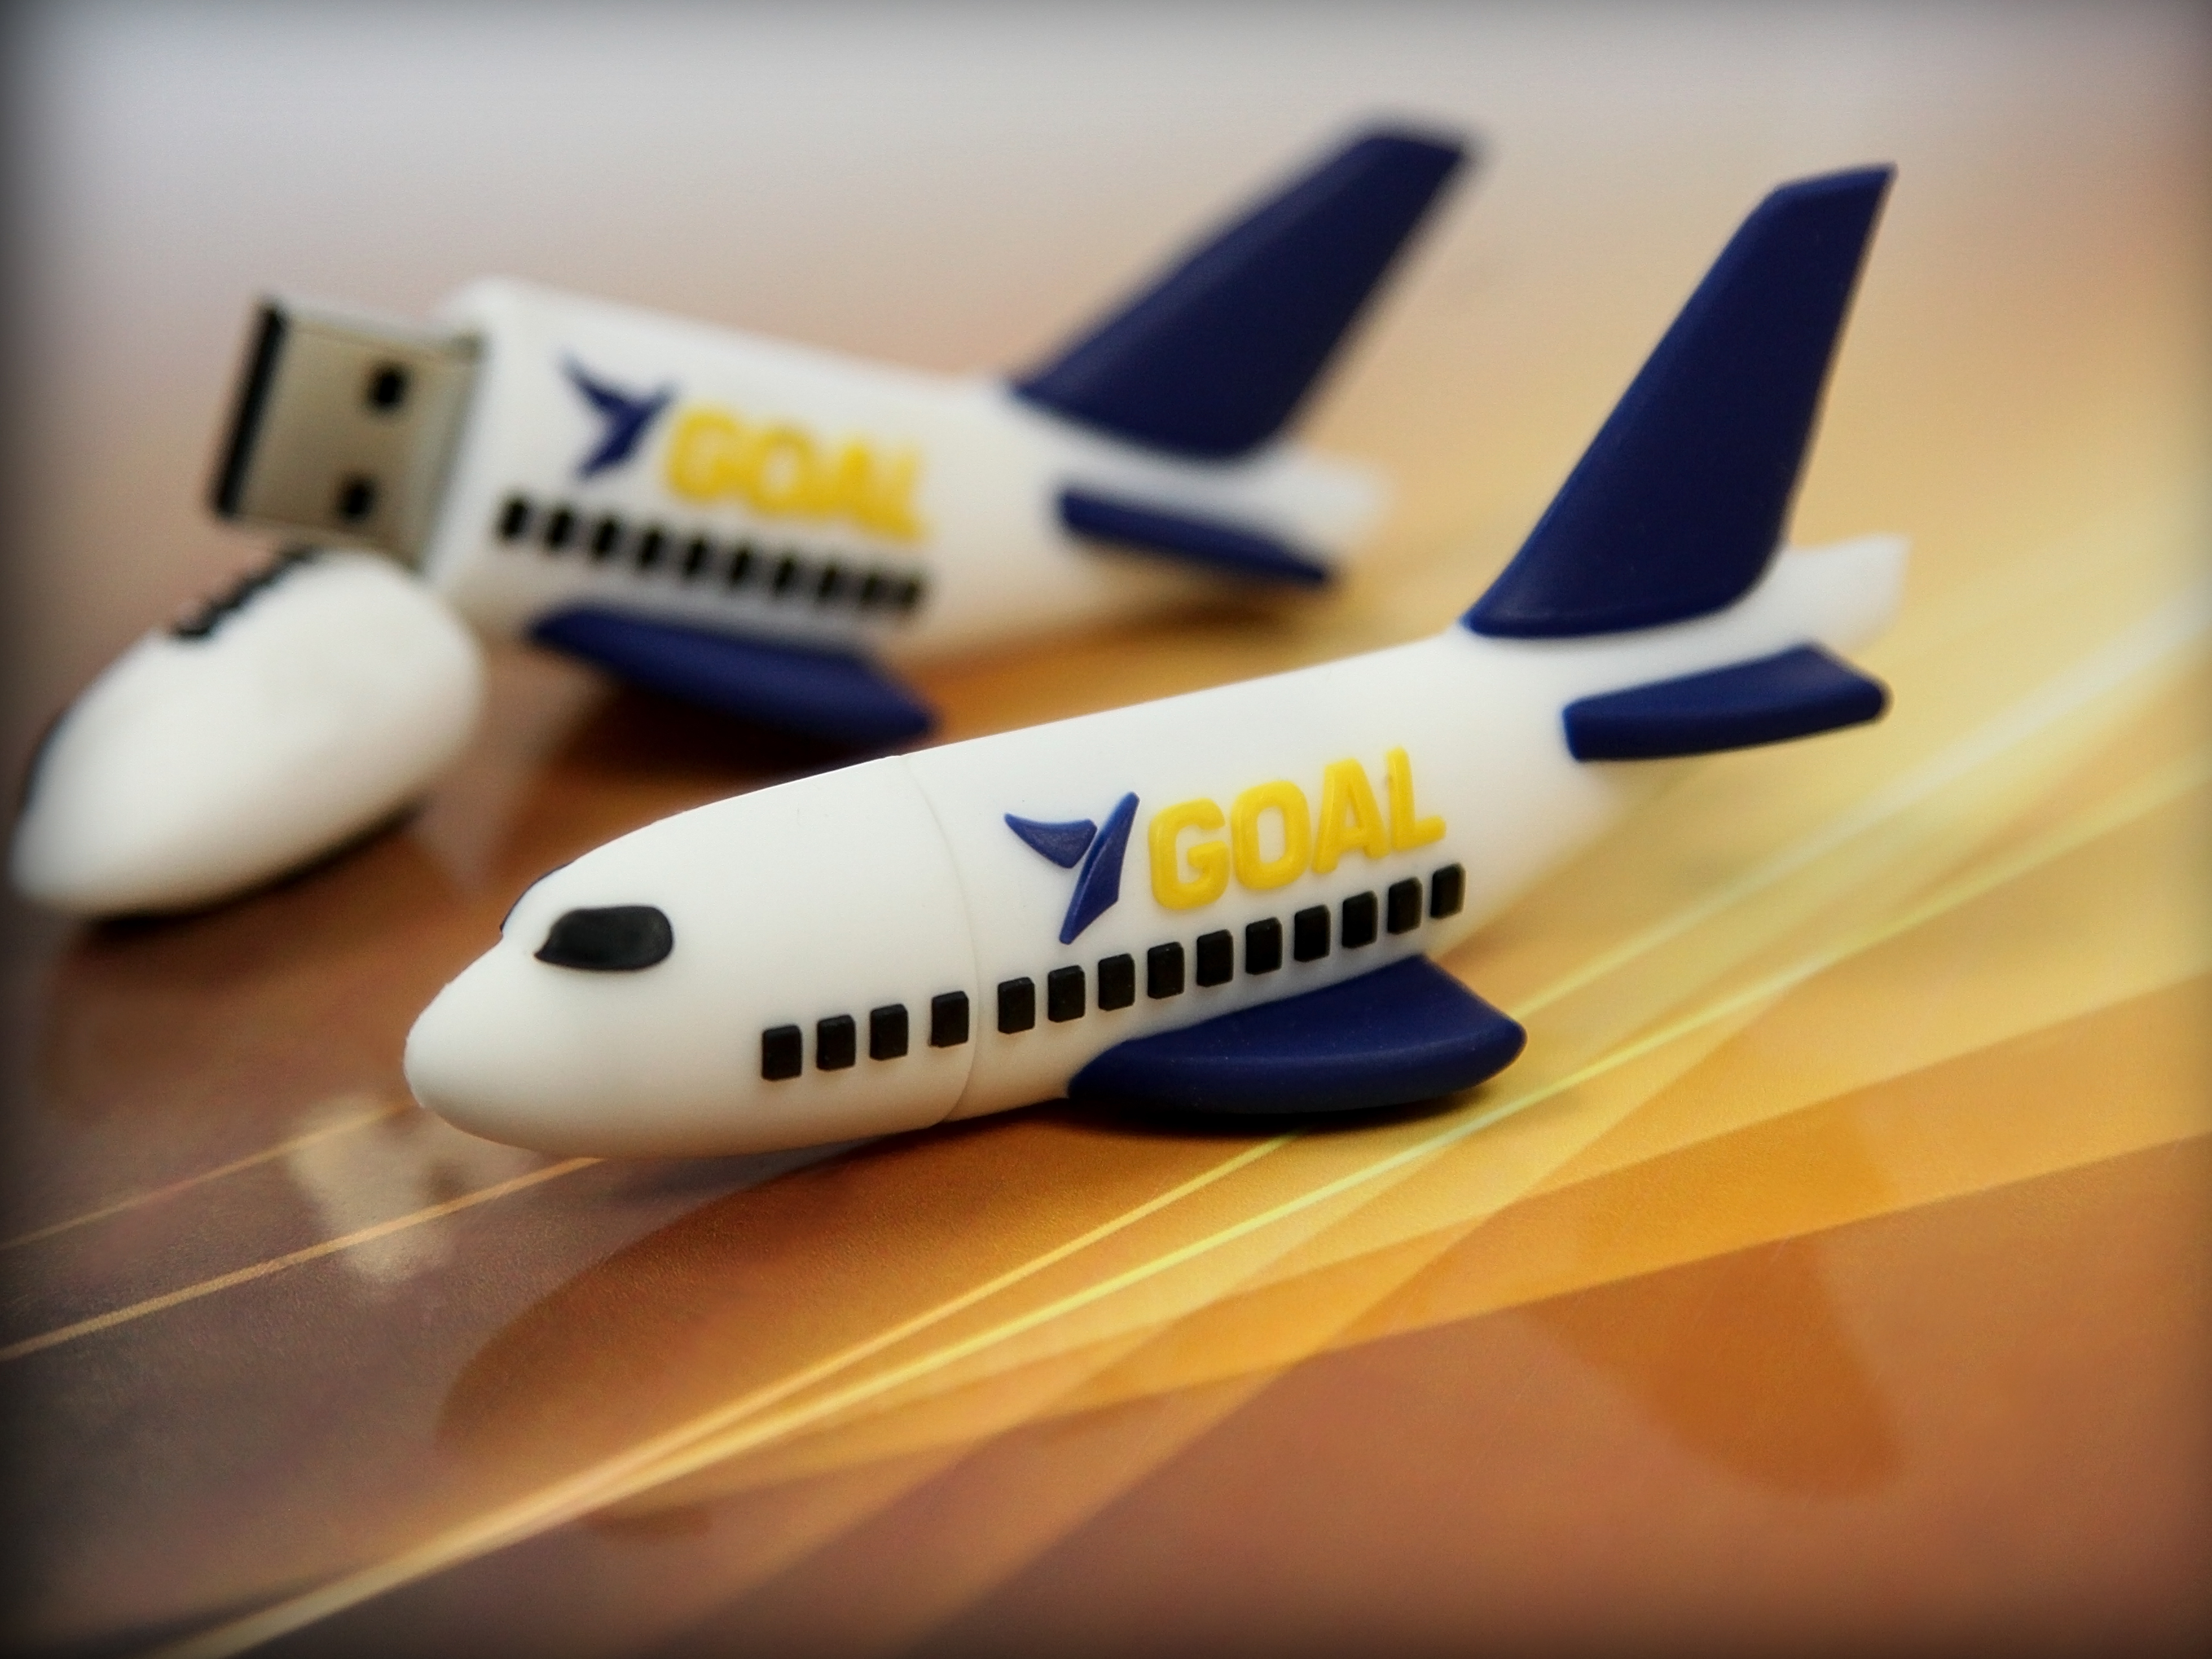 GOAL USB Stick Flugzeug Airplane Logo custom